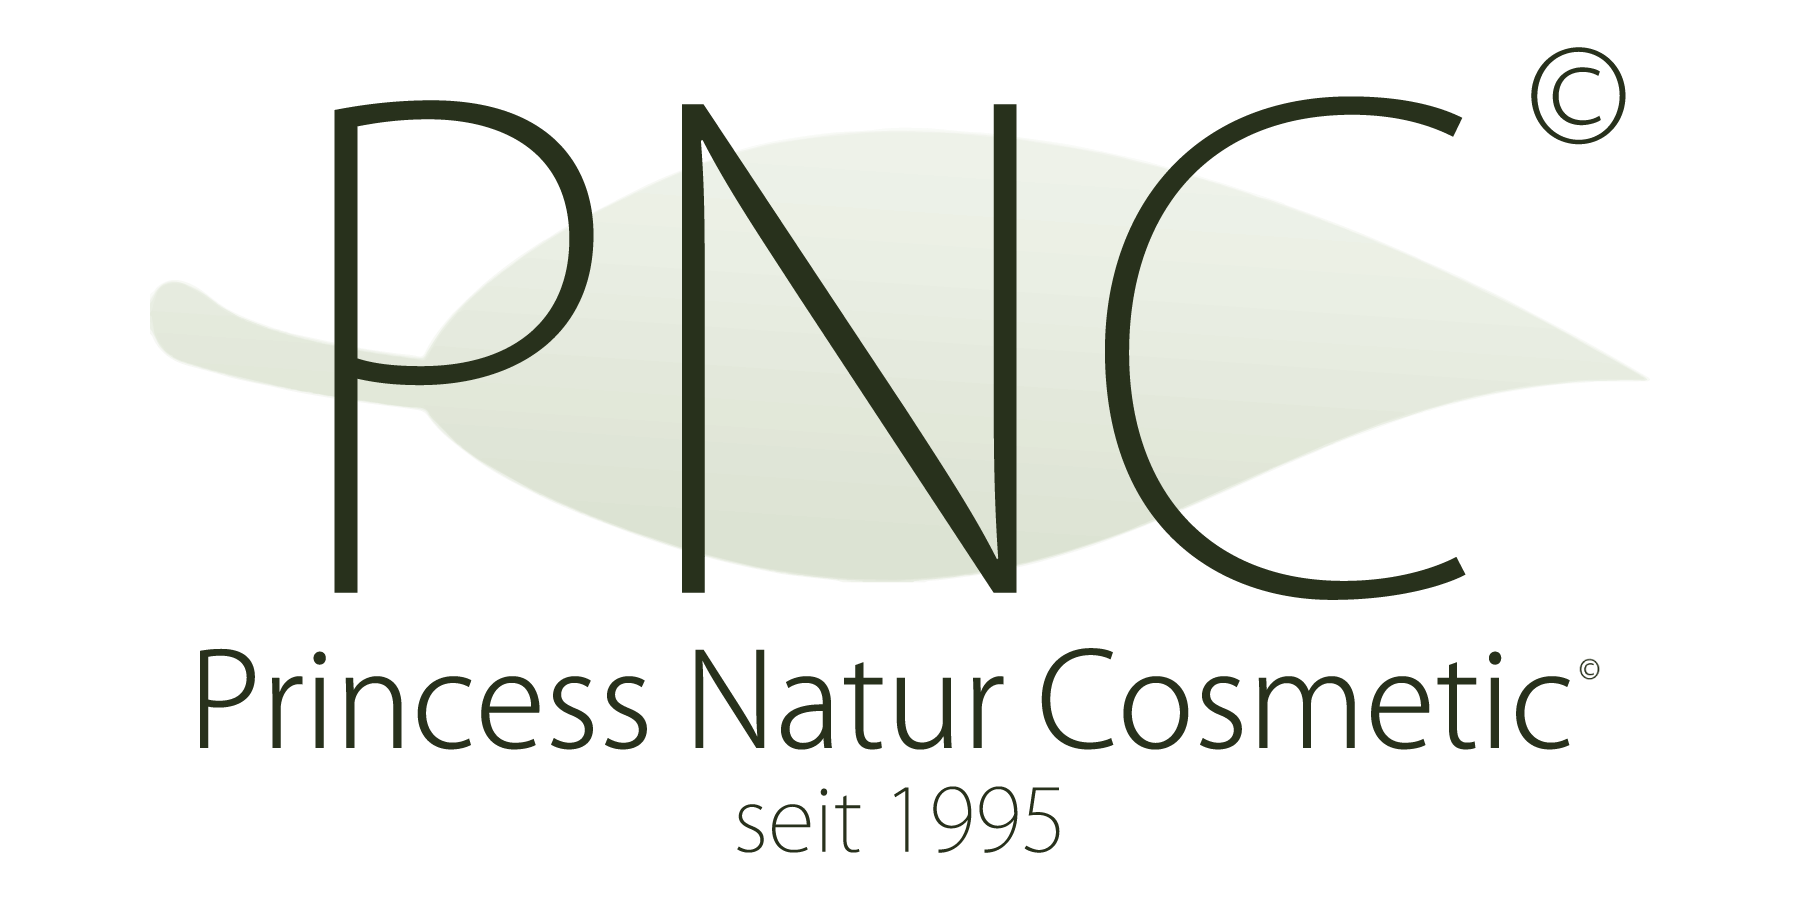 Princess Natur Cosmetic logo 2022